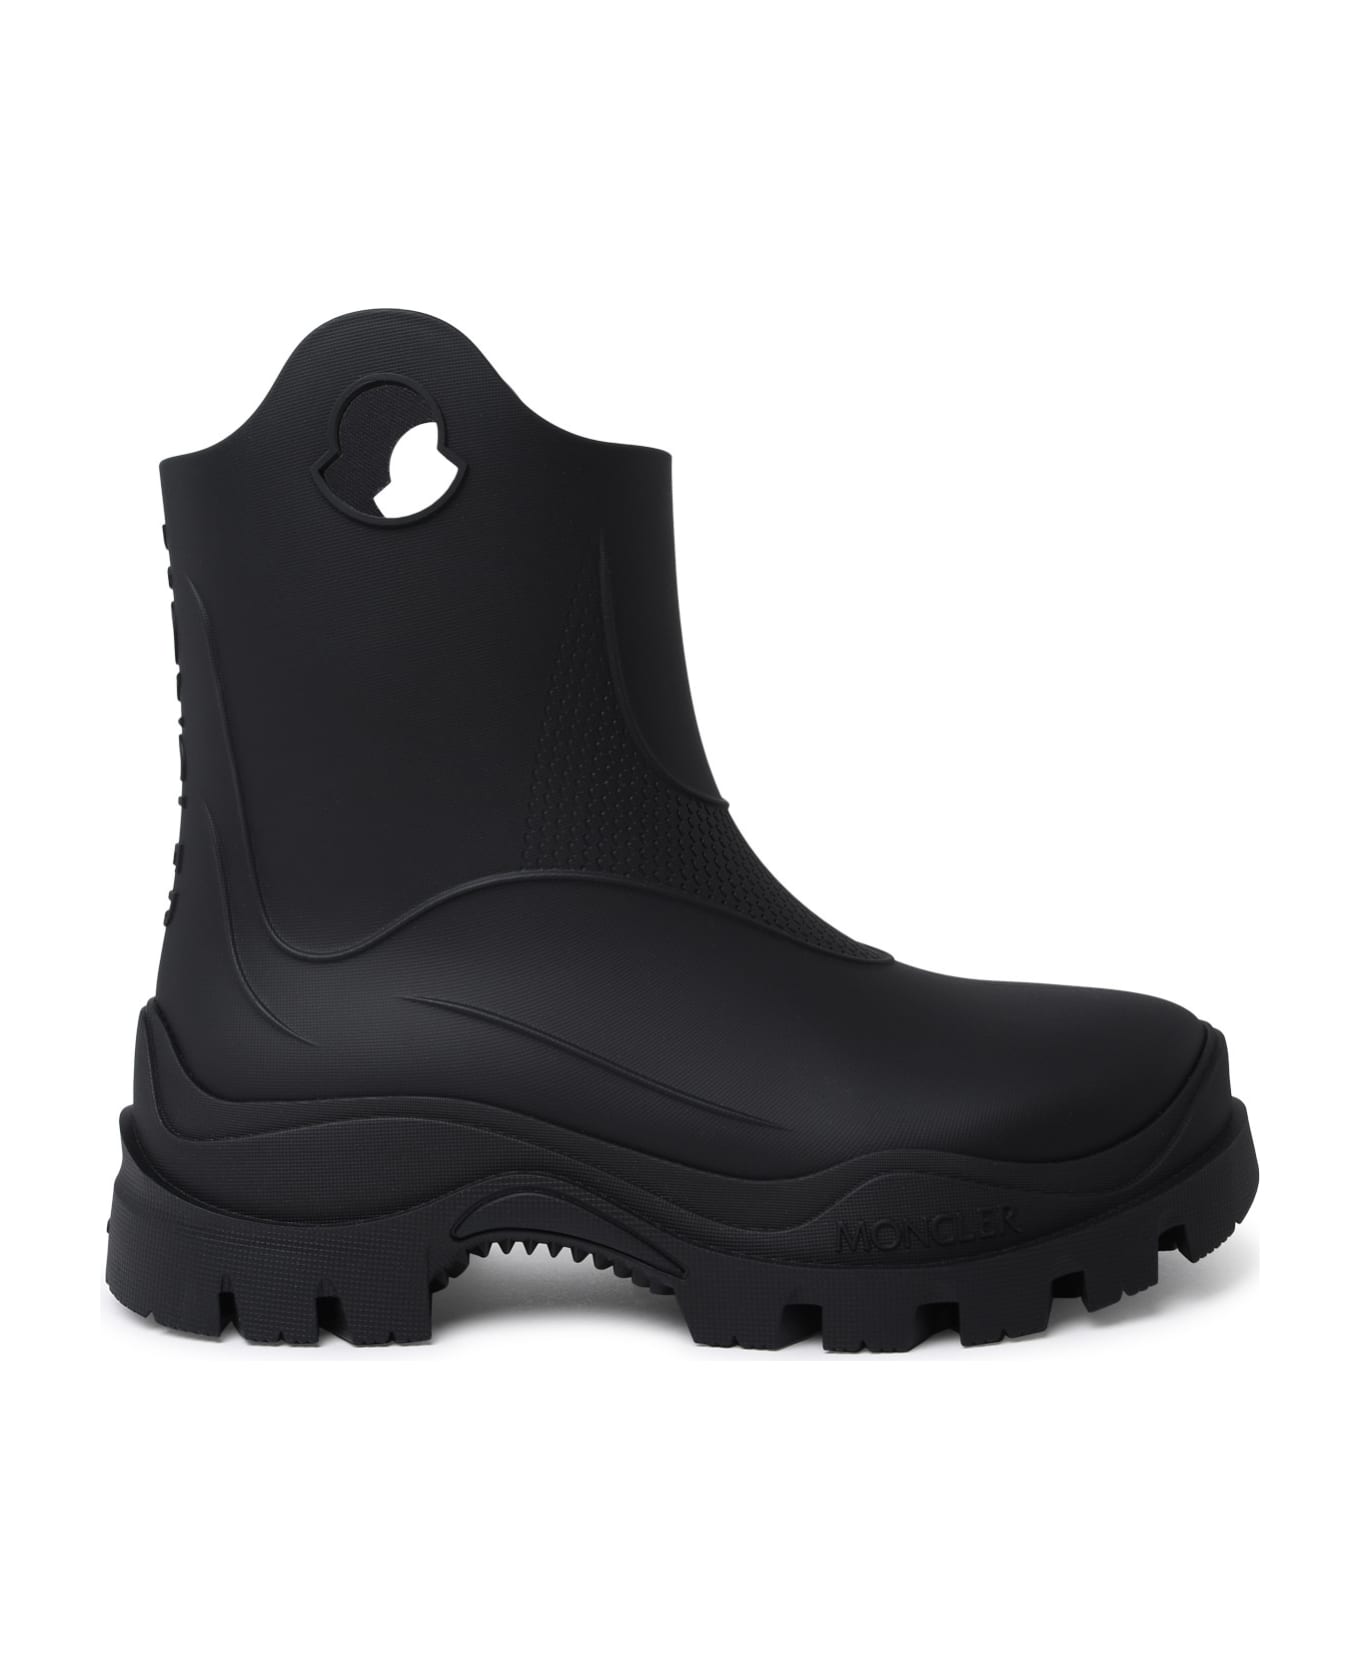 Moncler 'misty' Black Pvc Rain Boots - black ブーツ